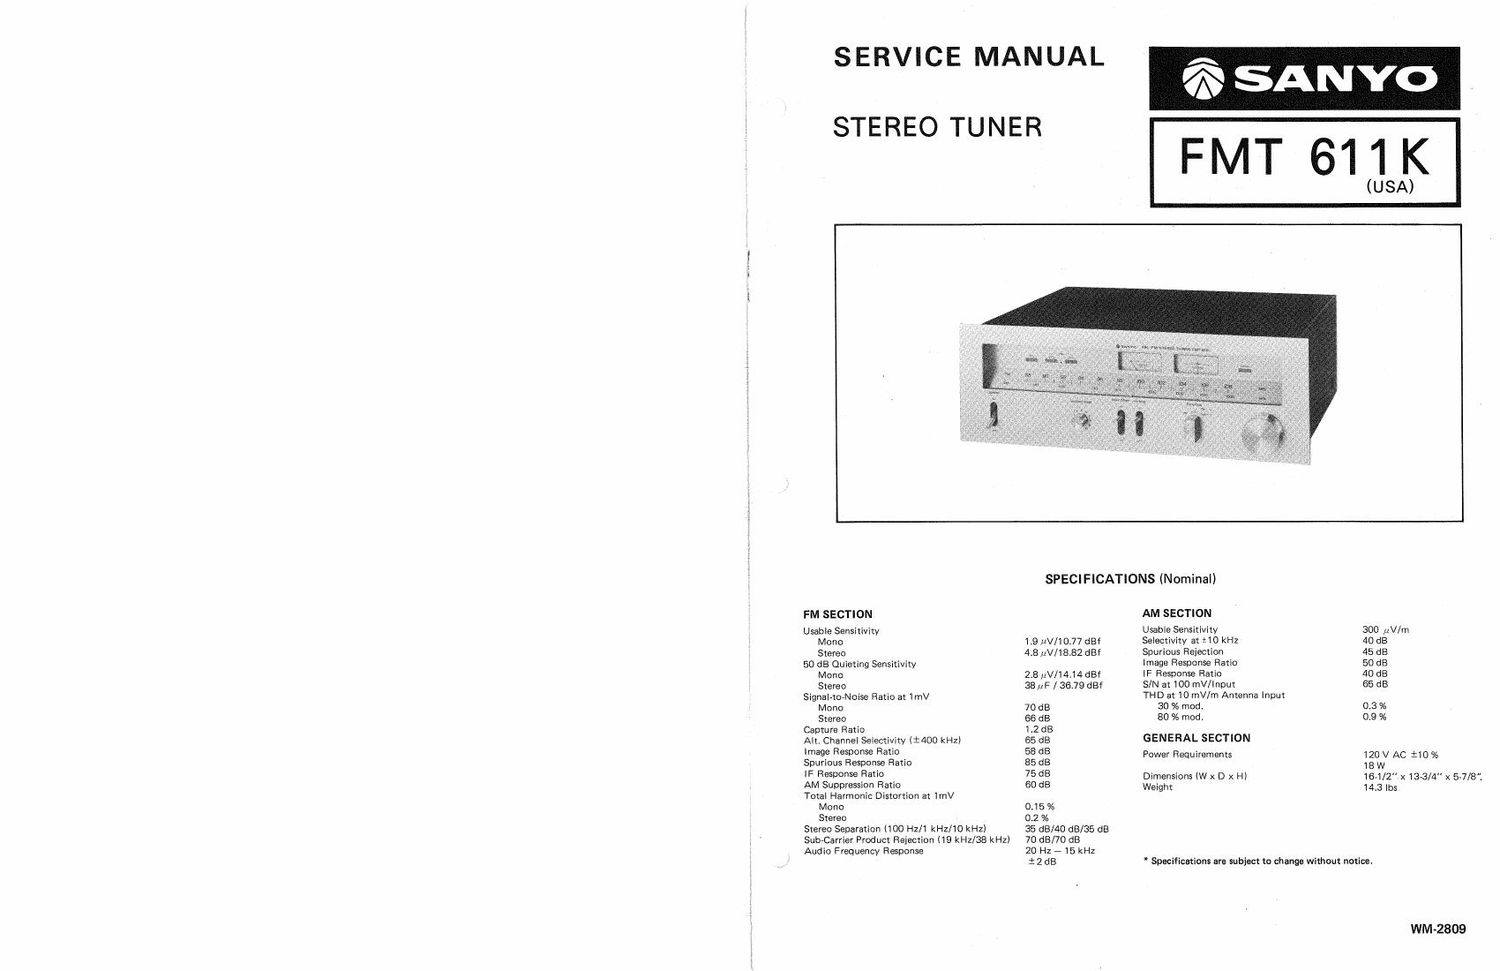 Sanyo FMT 611 K Service Manual